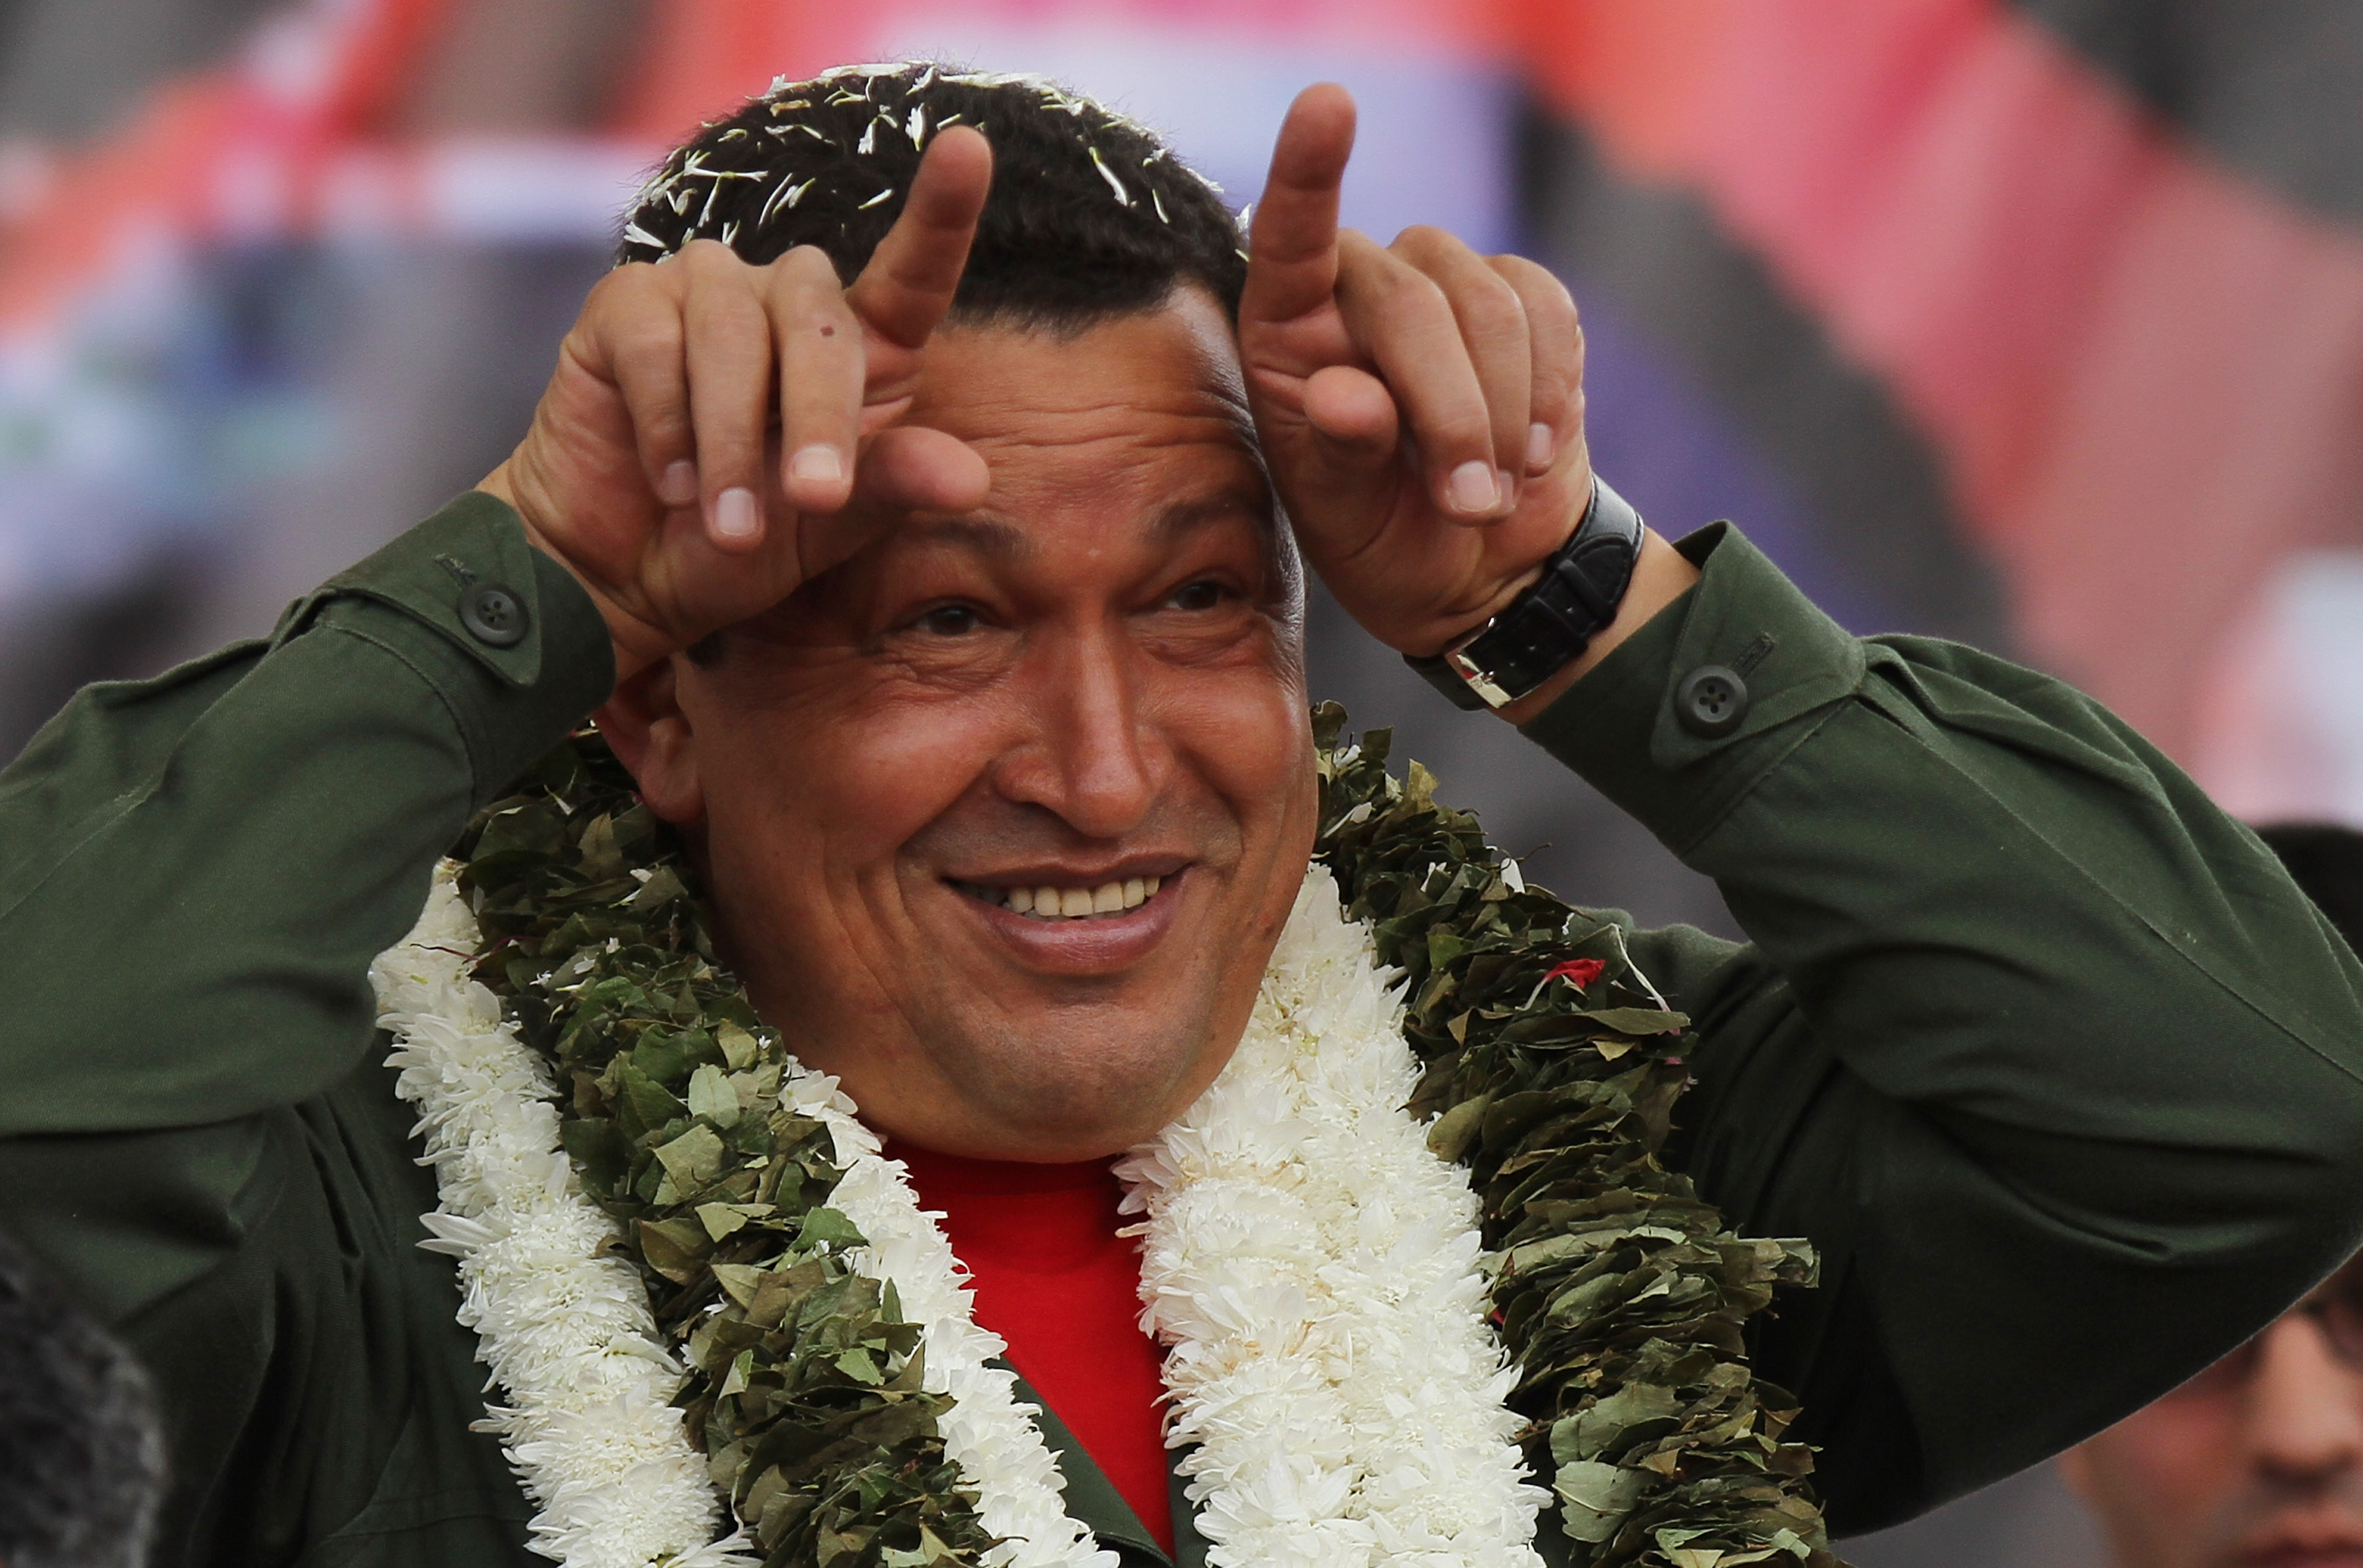 Venezuela, Hugo Chavez, Brott och straff, Polisen, Kritik